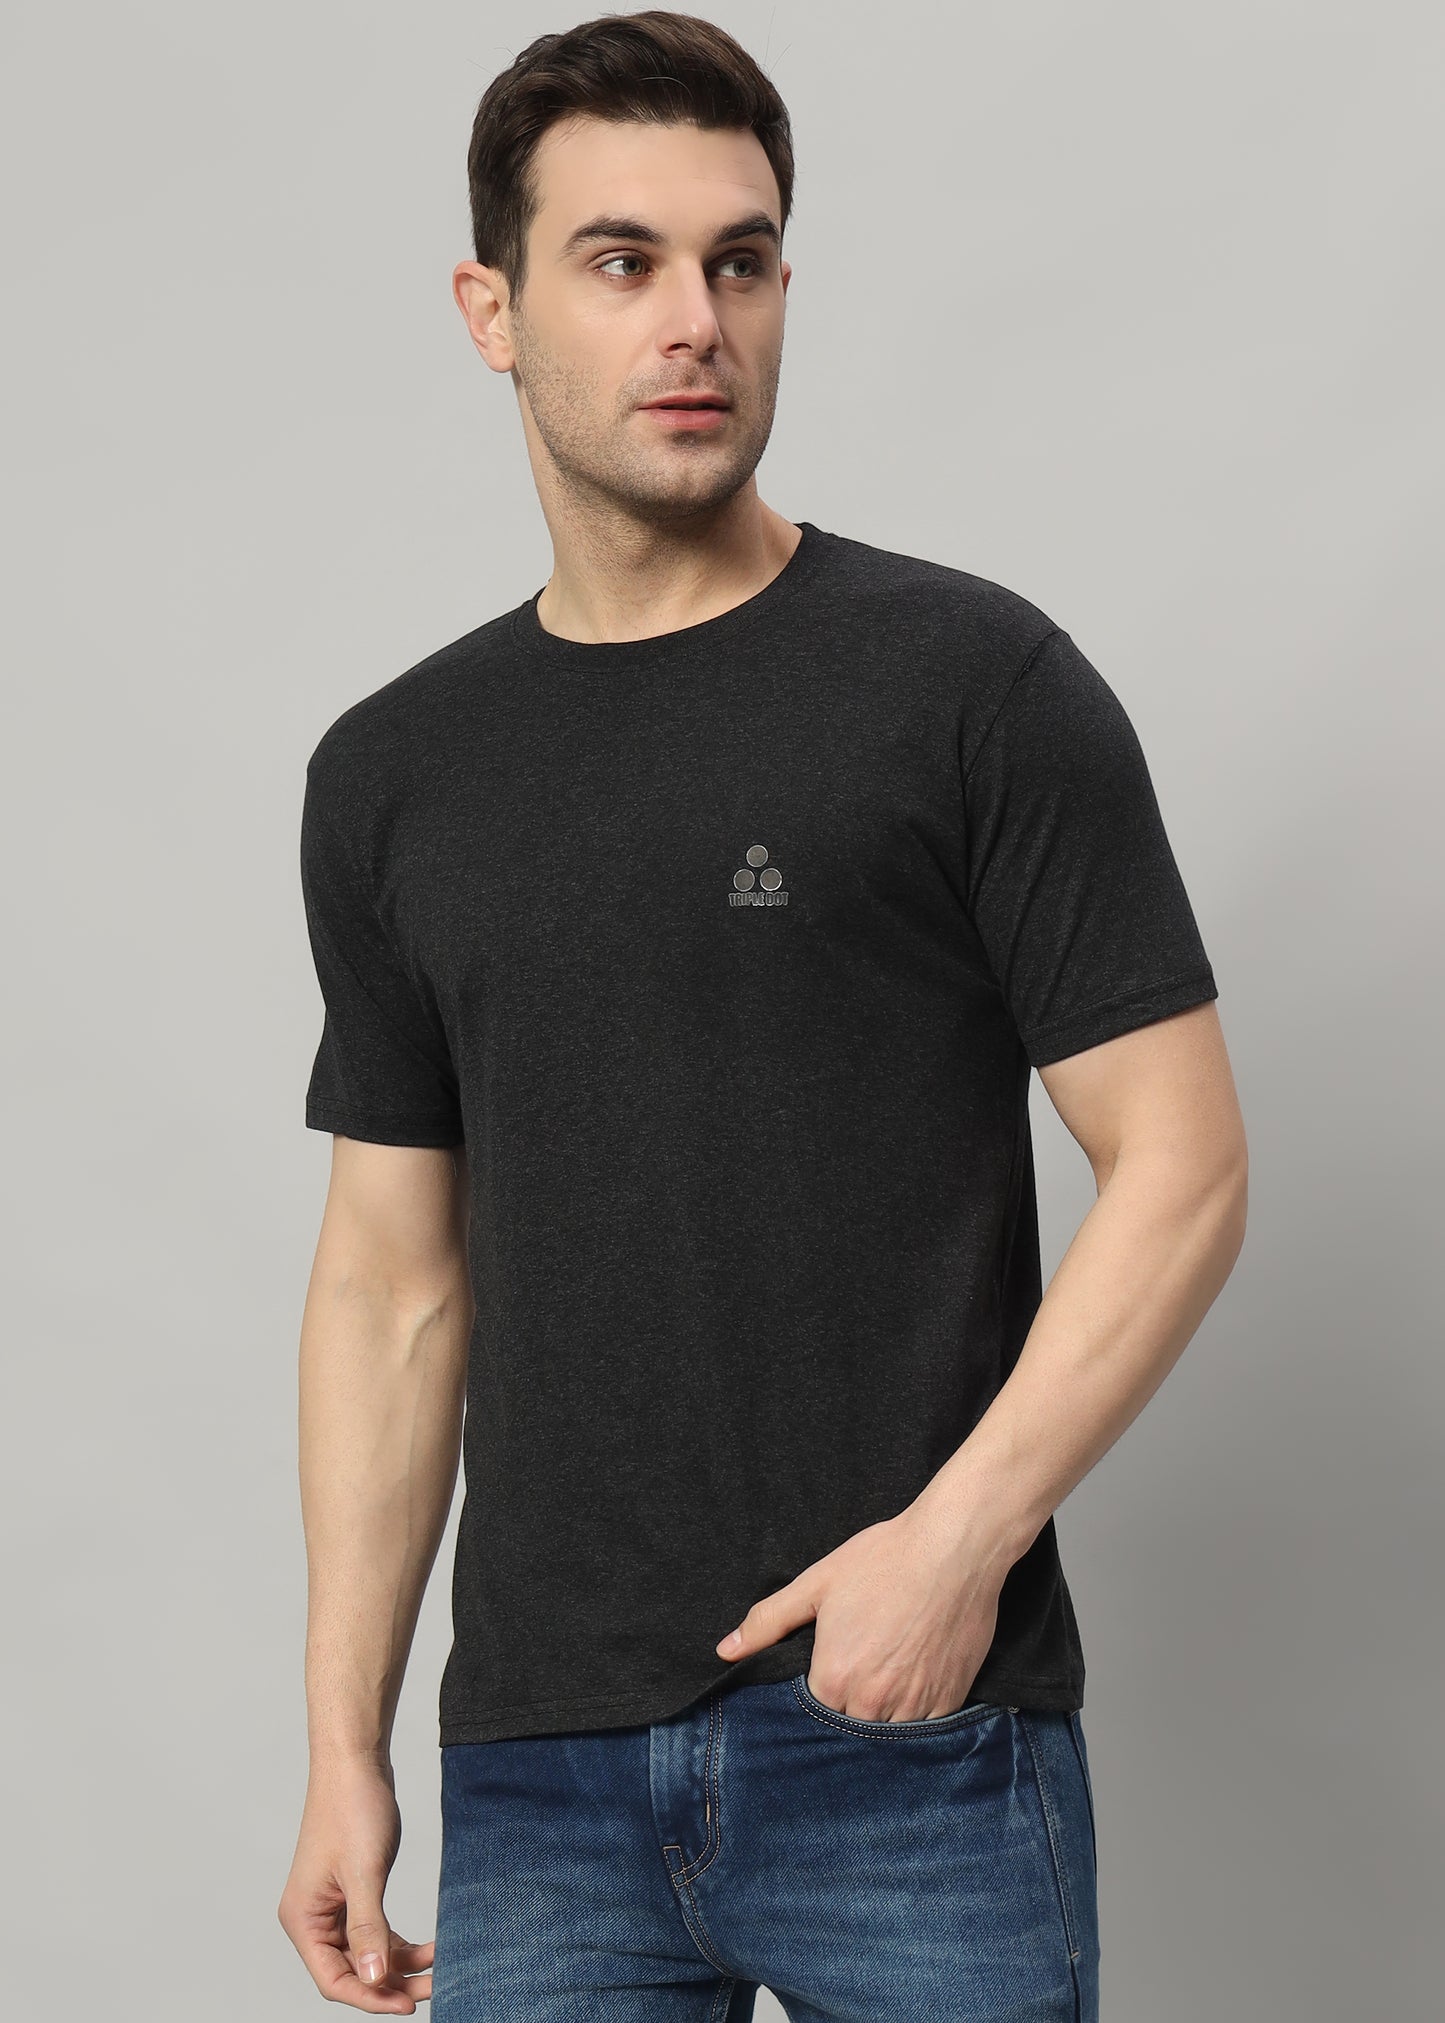 Men's Black Round Neck Solid T-Shirt Triple dot